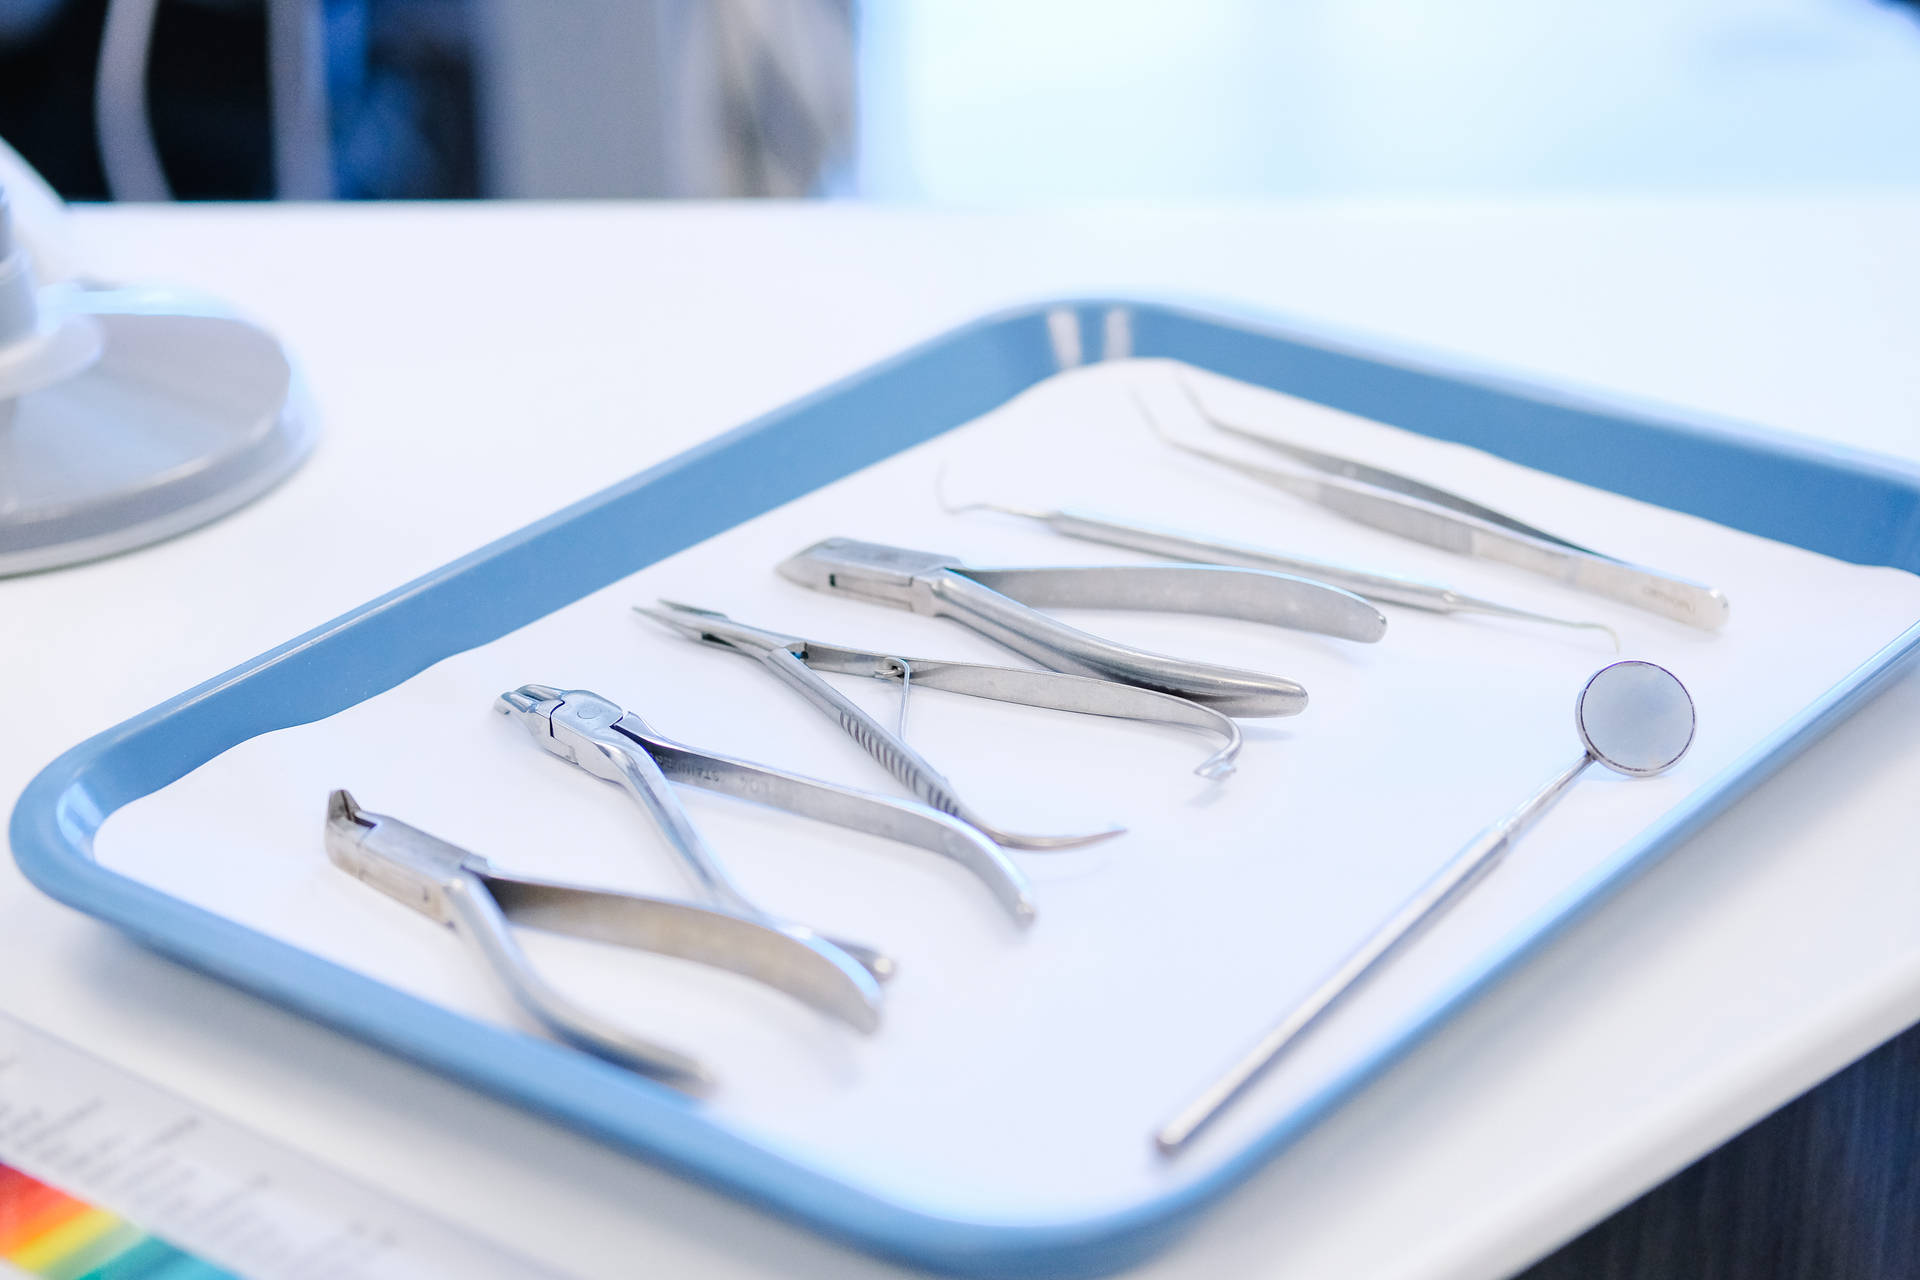 Dentistry Tools On Blue Tray